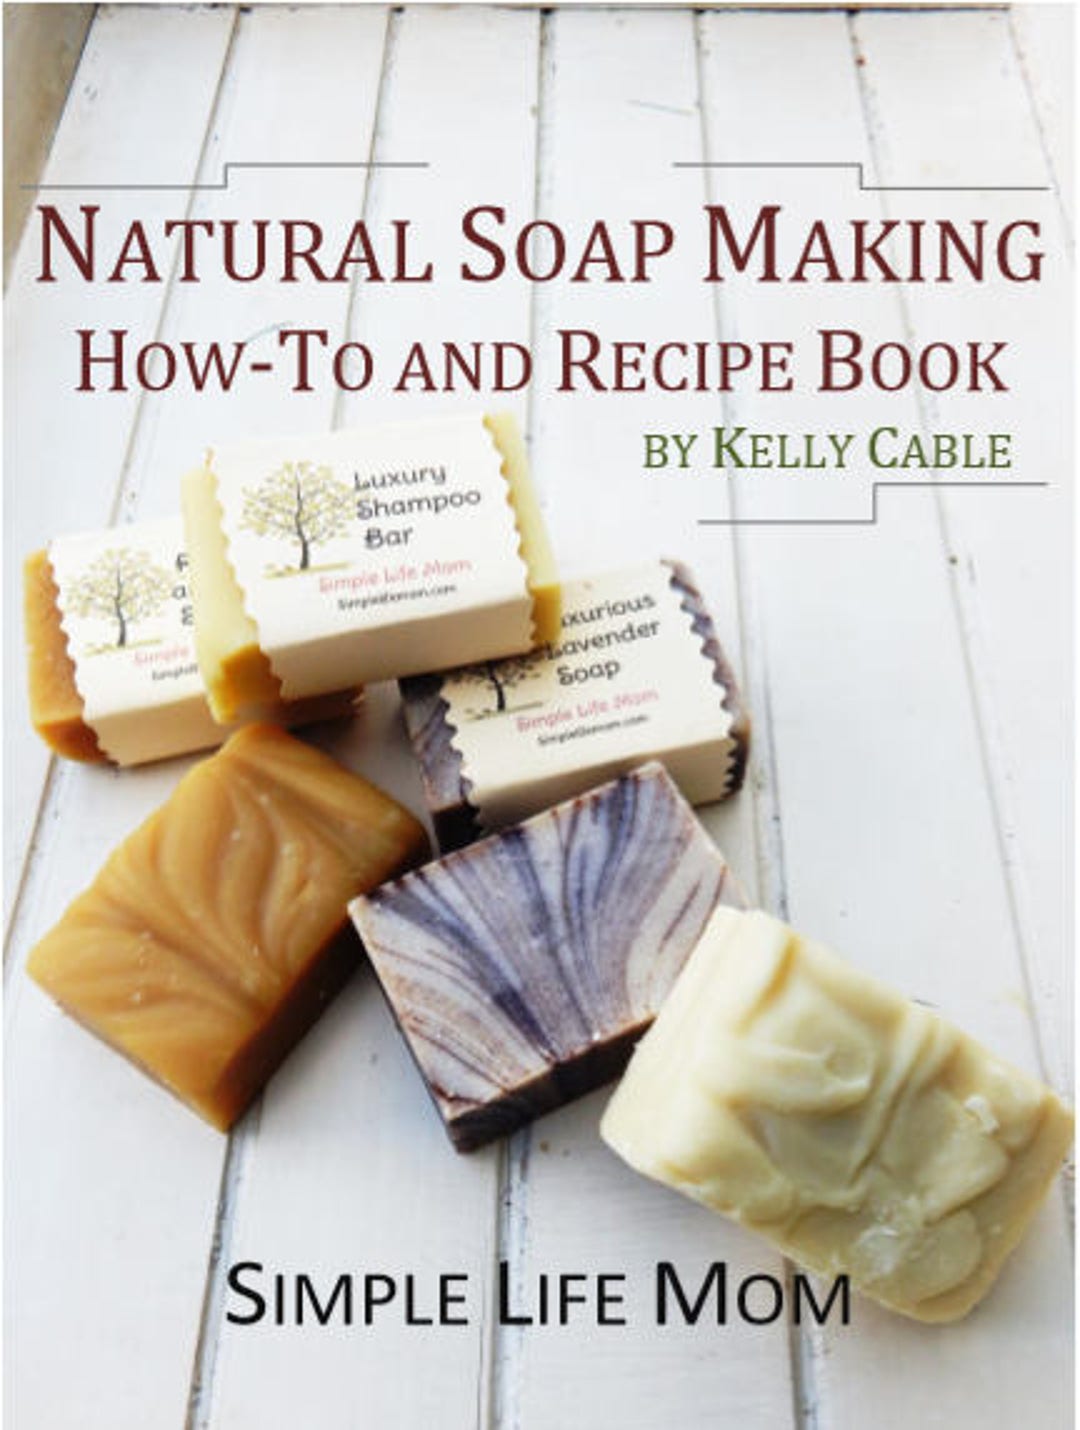 Natural Soap Color Ebooks Bundle - Natural Soap Color and Natural Soap